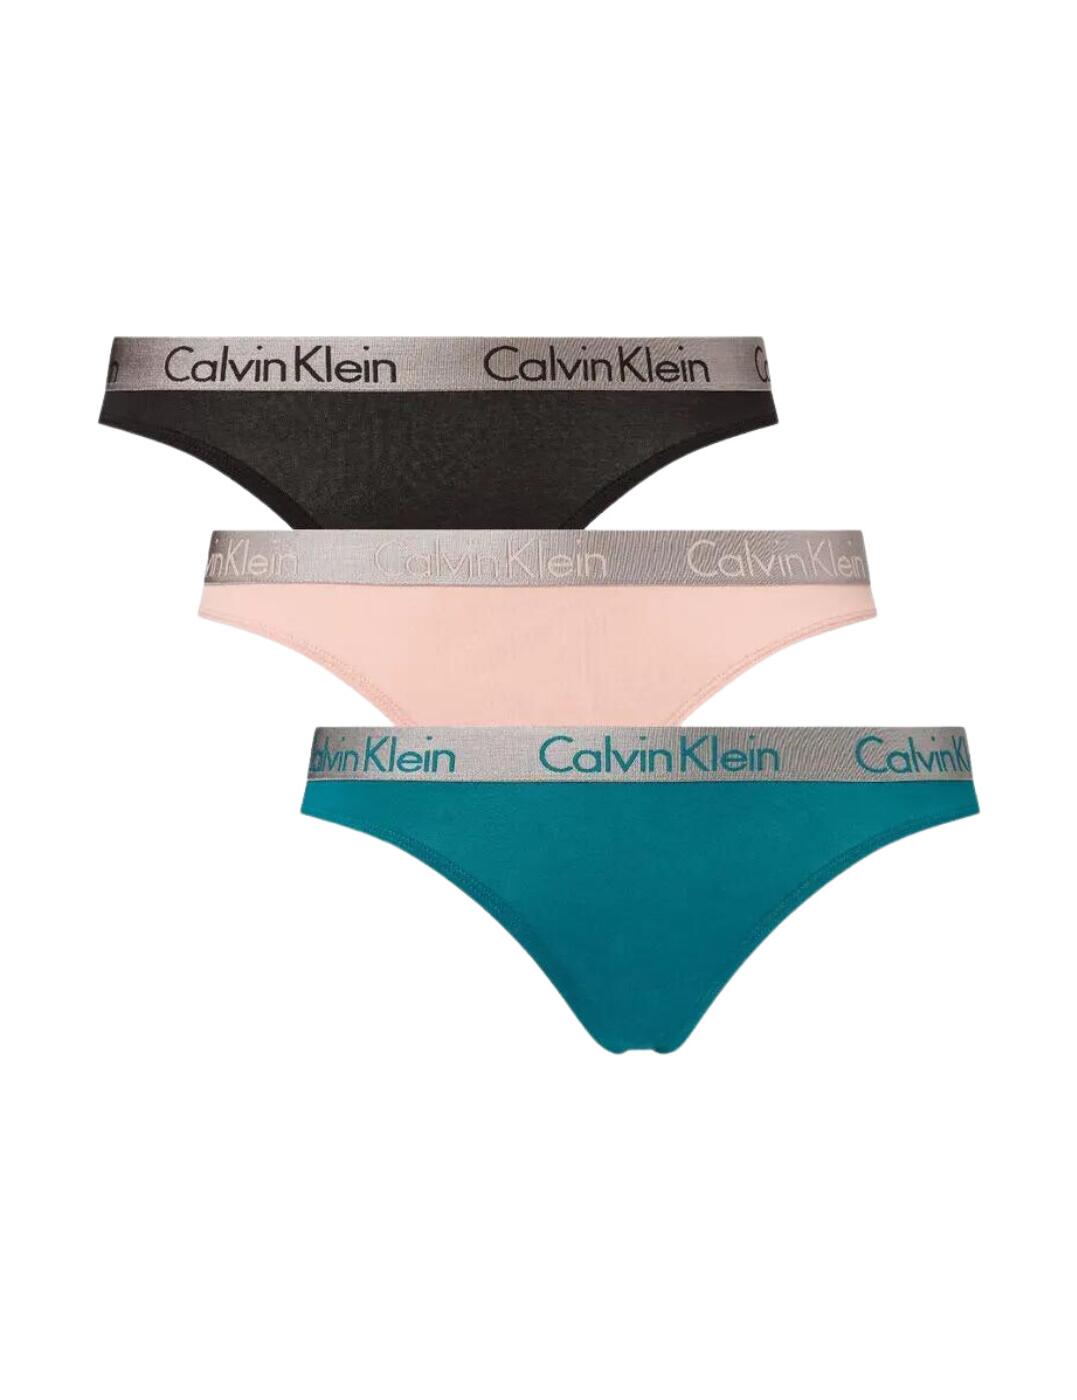 000QD3590E Calvin Klein Radiant Cotton Thong 3 Pack - QD3590E Turtle  Bay/Black/Cherry Blossom